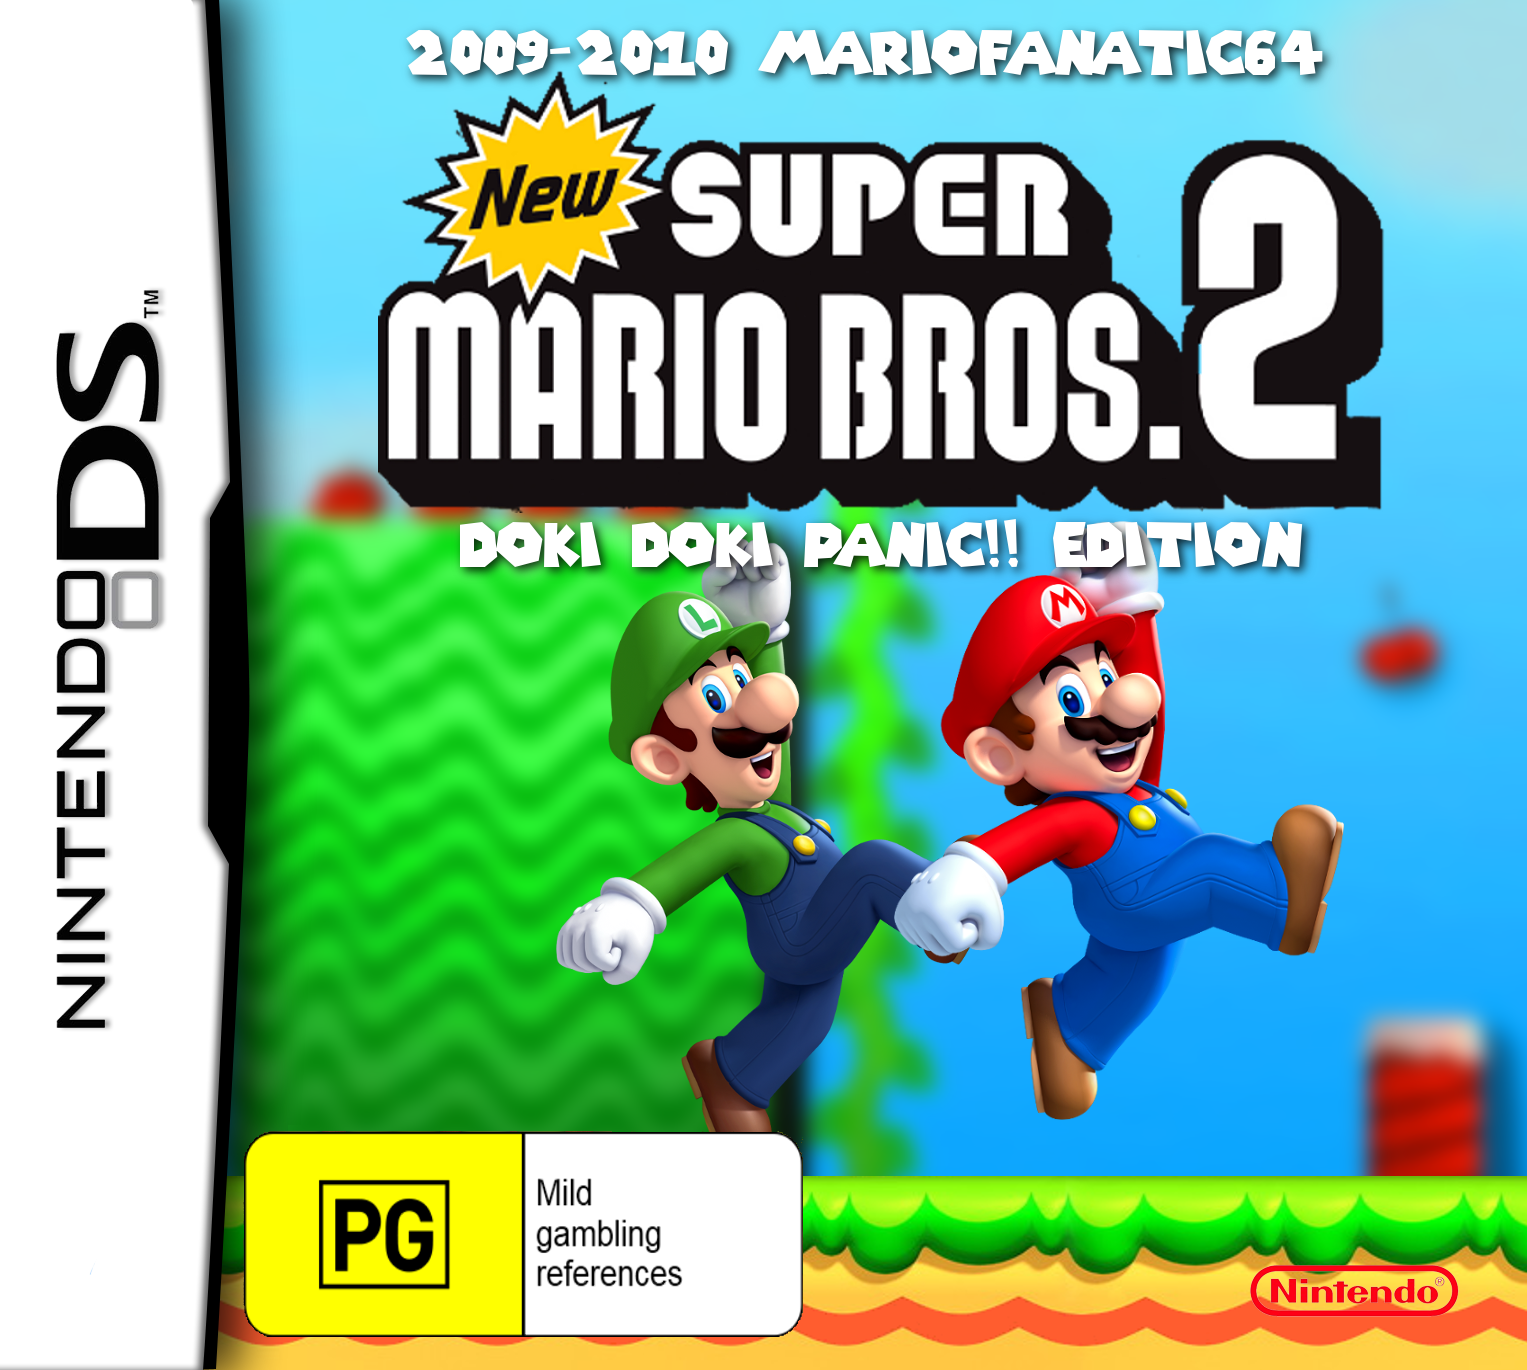 New Super Mario Bros. 2 